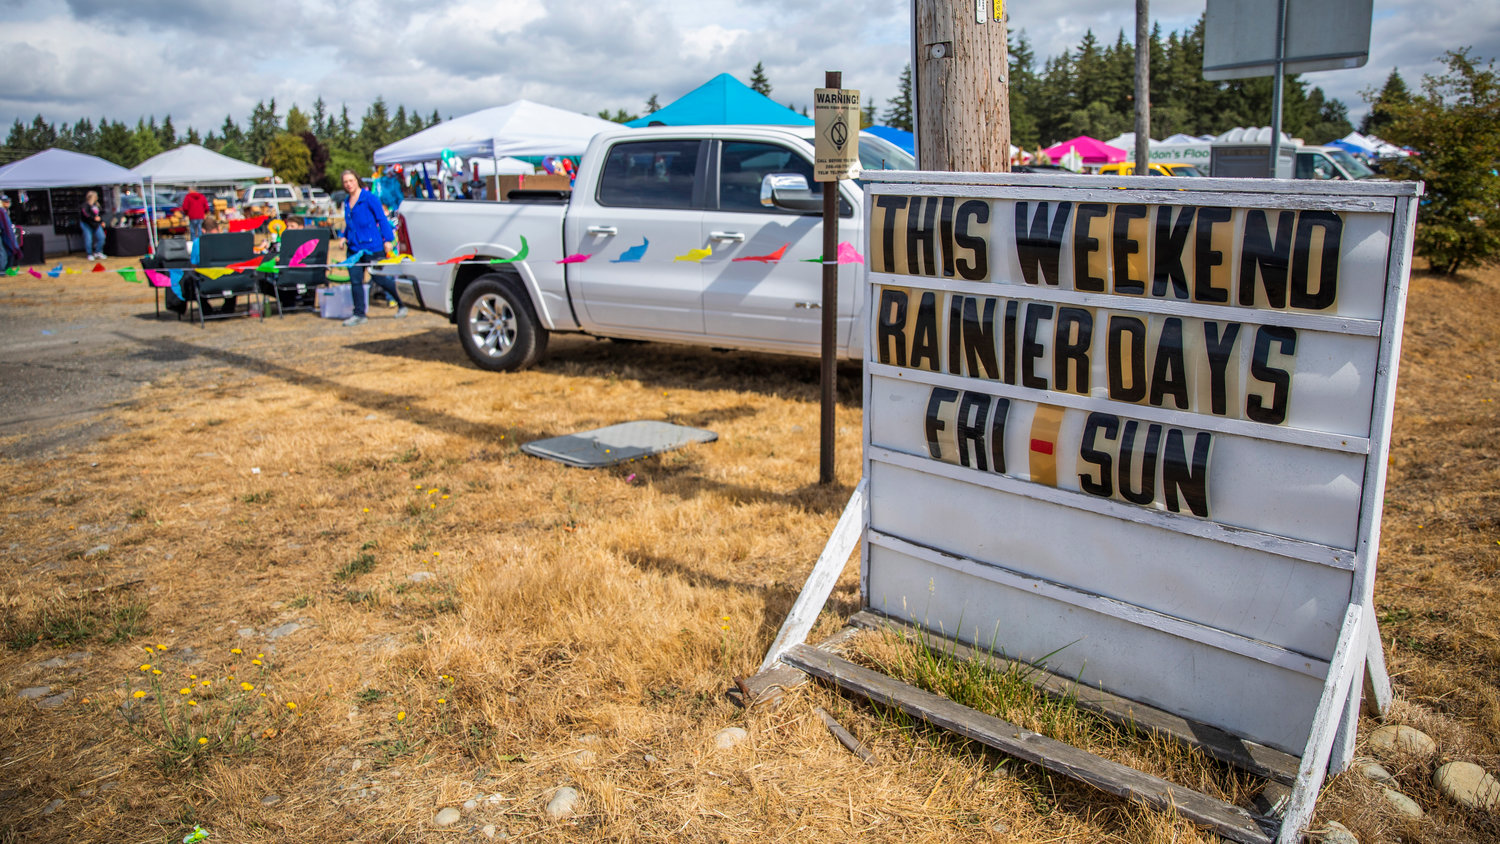 Visitors talk to vendors under canopies during Rainier Days on Saturday.